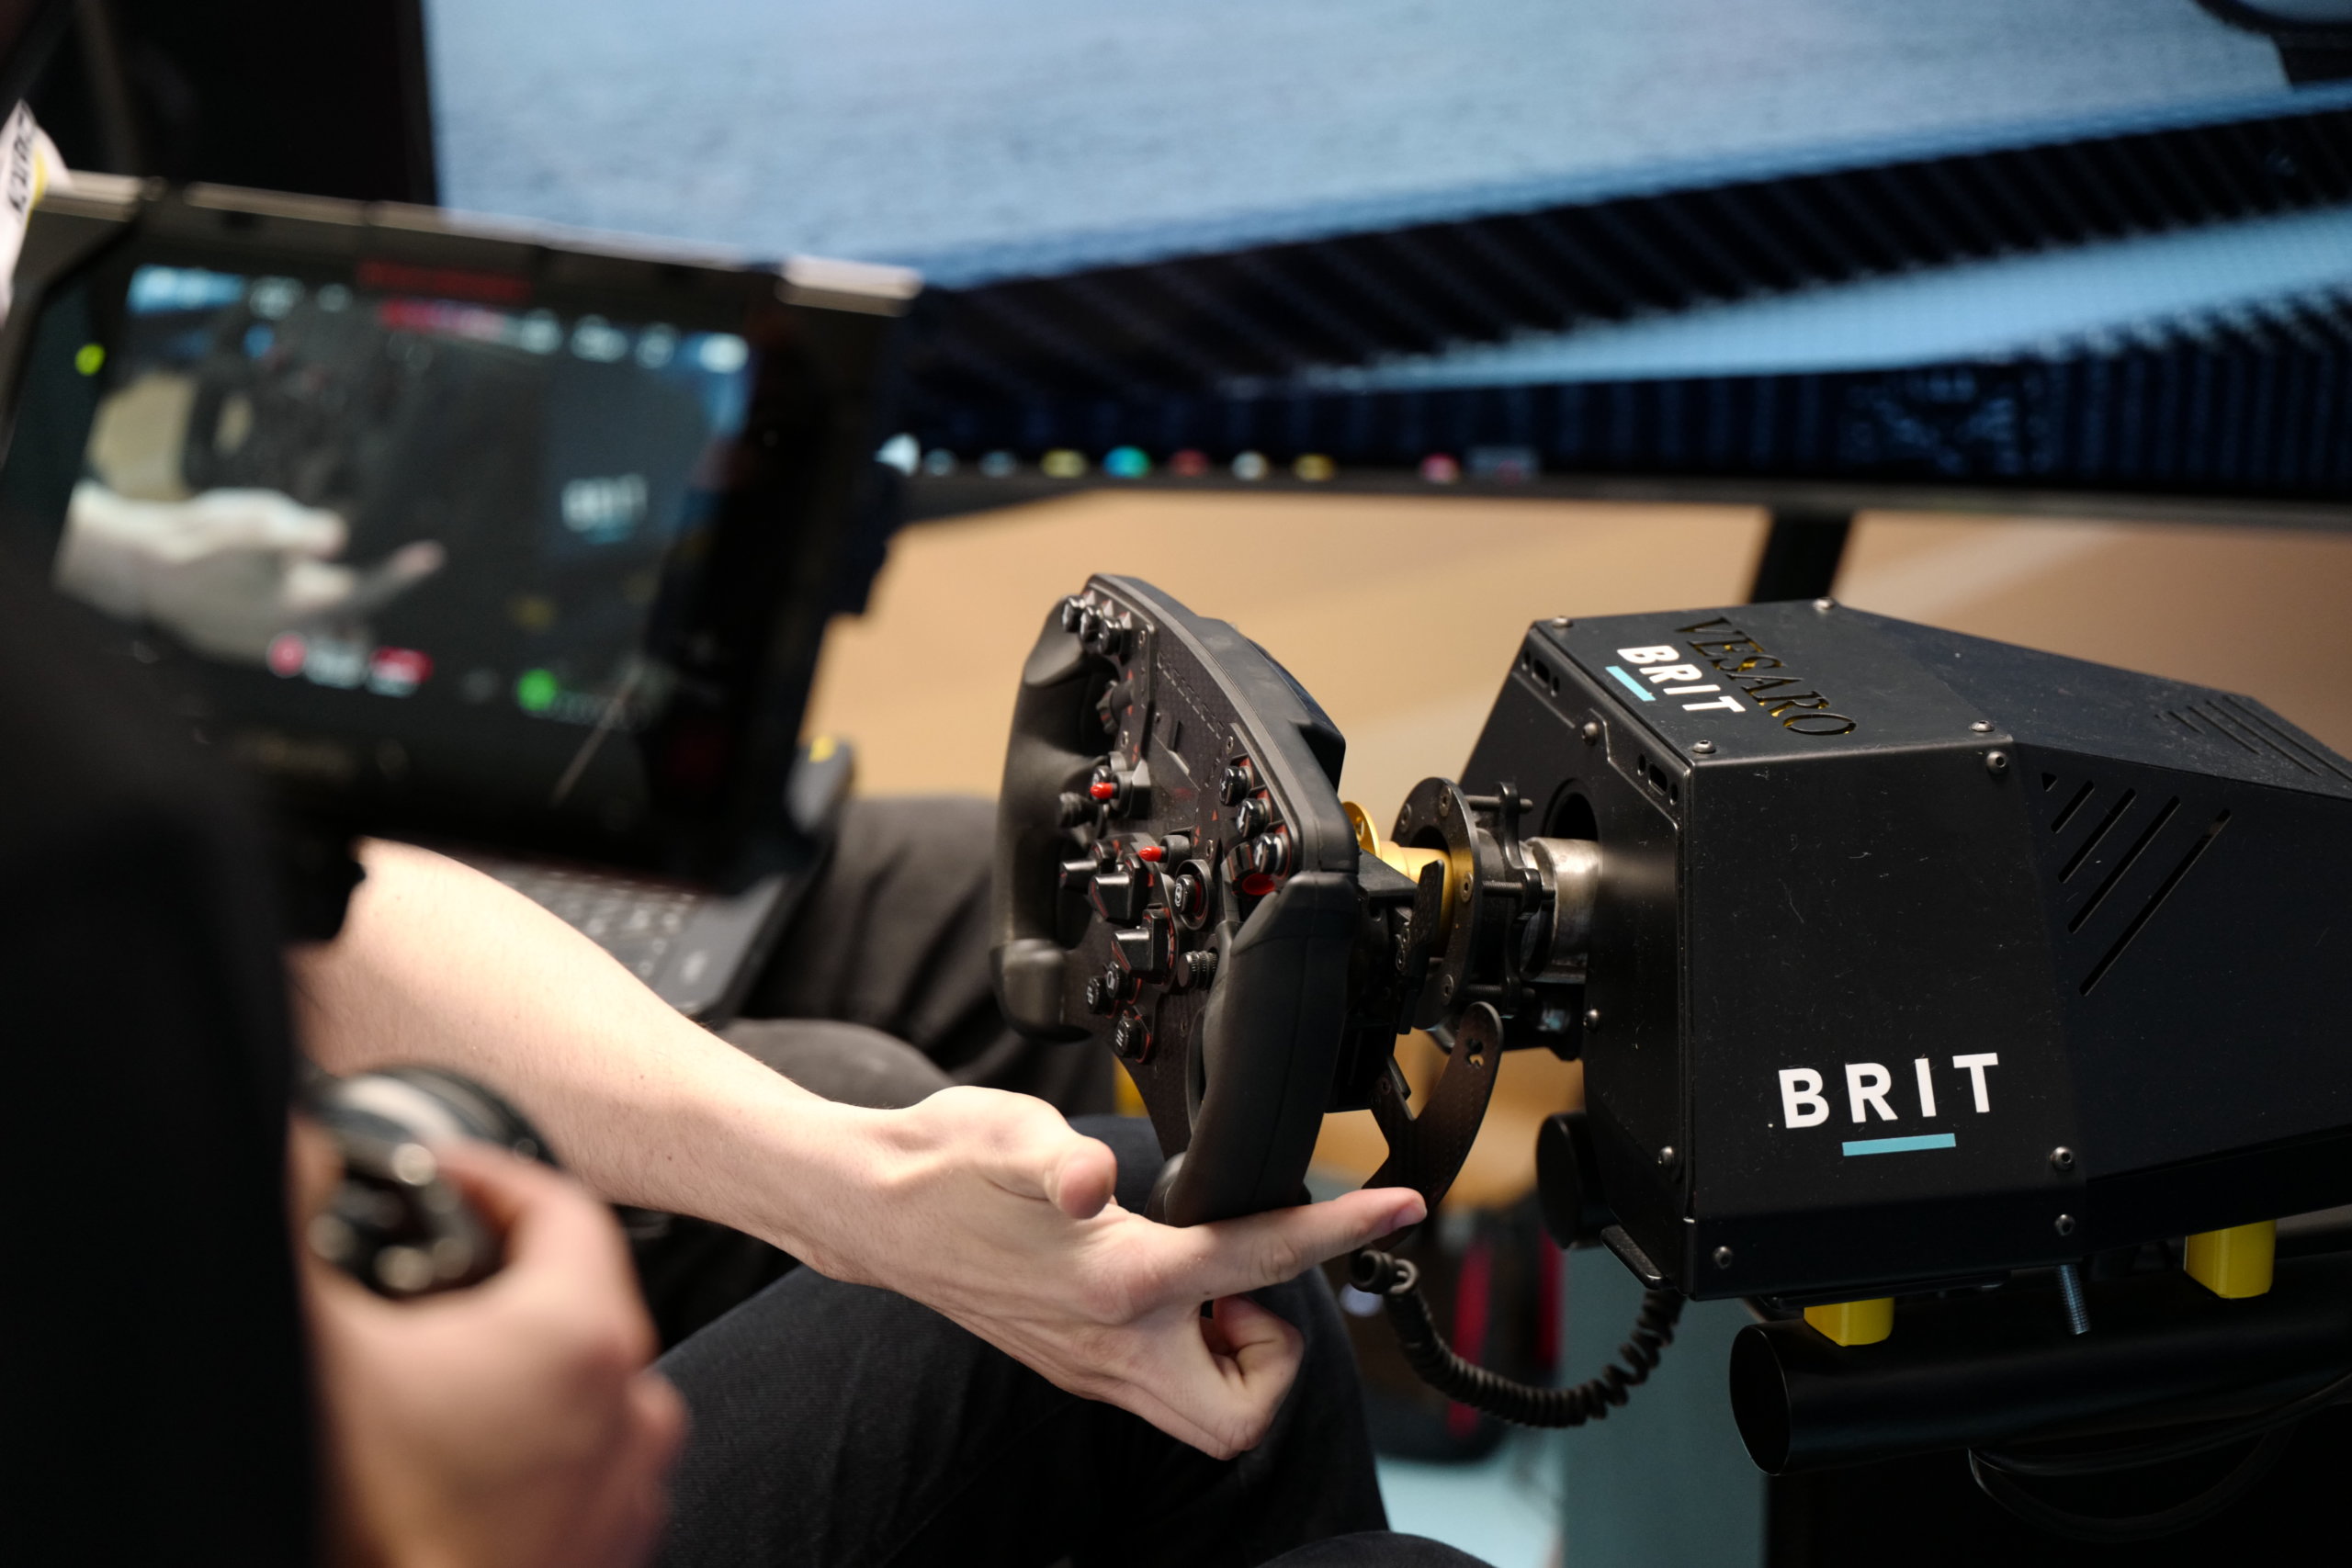 Hand controls on a Team BRIT simulator